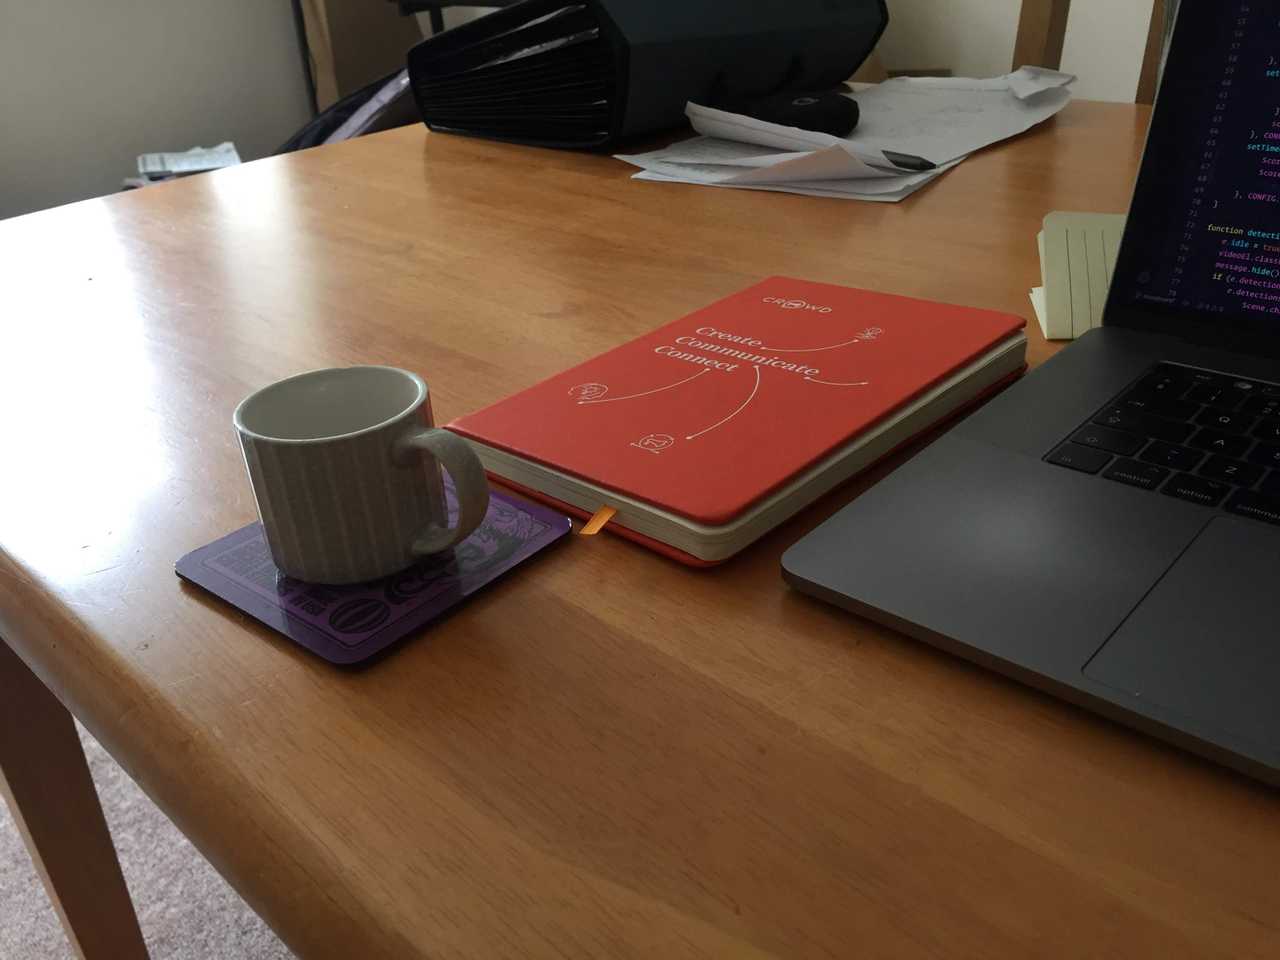 My laptop, coffee mug, and notepad